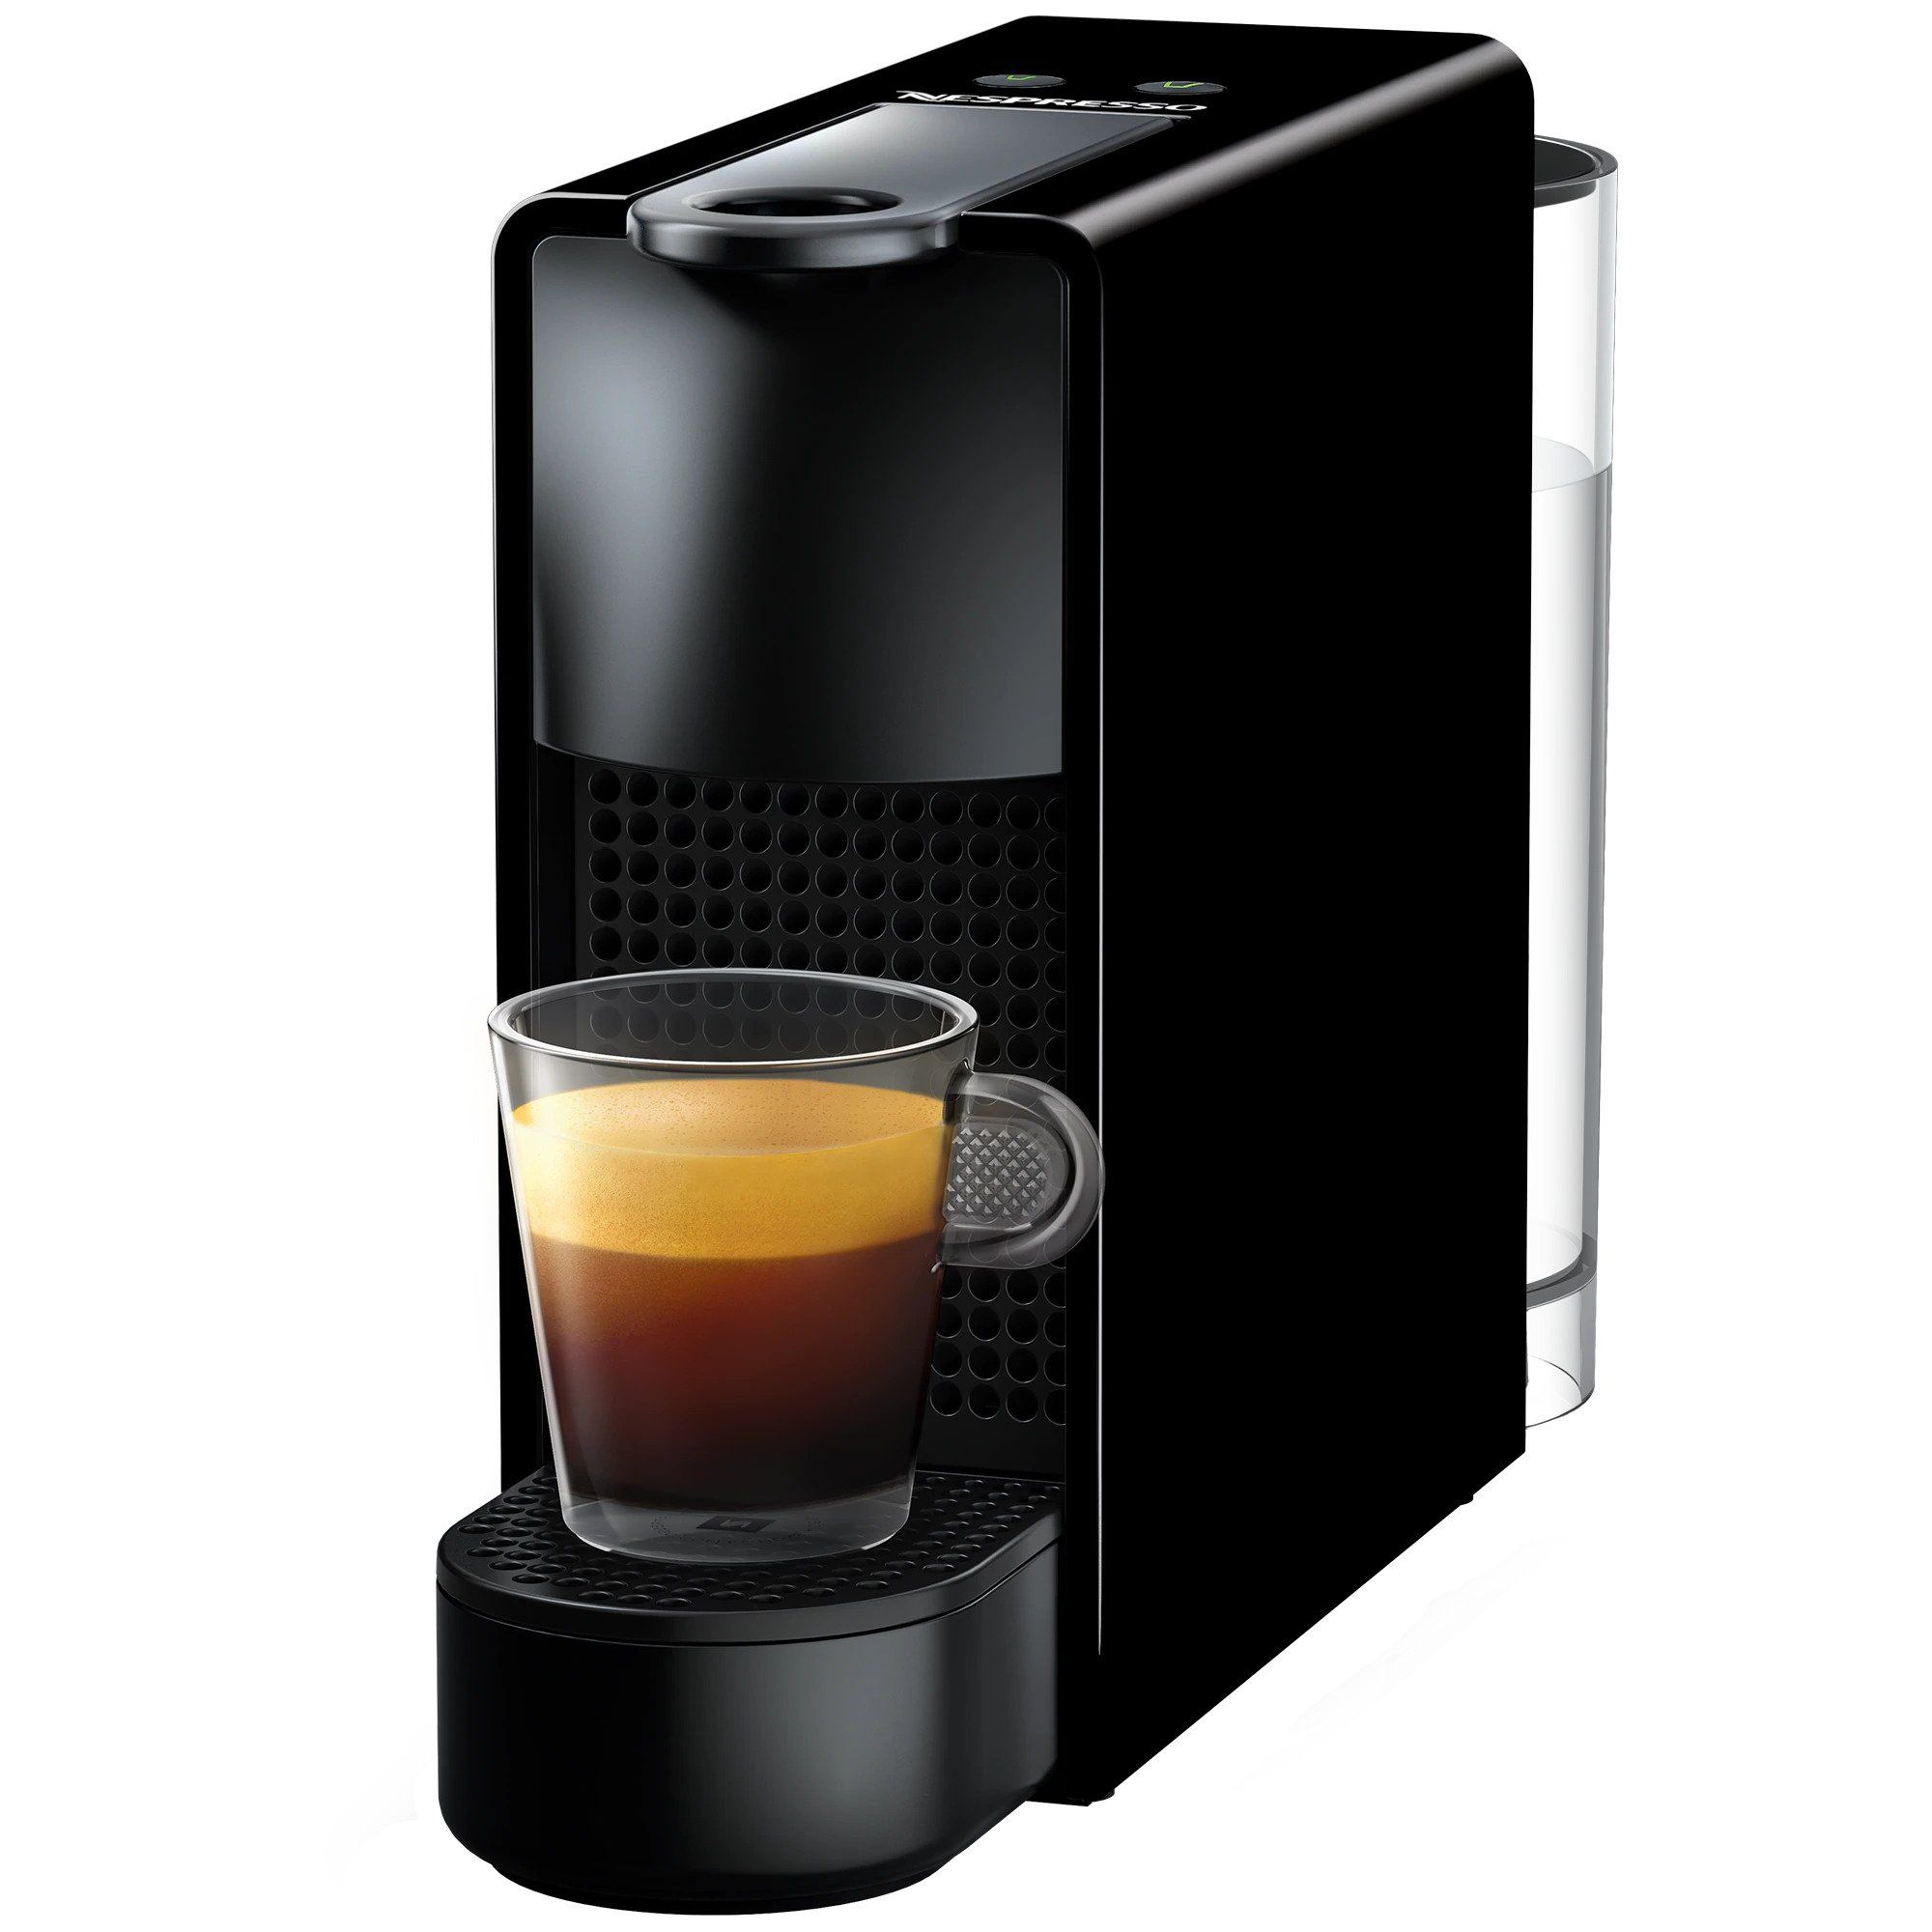 Nespresso Machine Mini Essenza C30 Black, Coffee Machine 19 Bar Pressure, 2Cup Sizes, NESP-10298